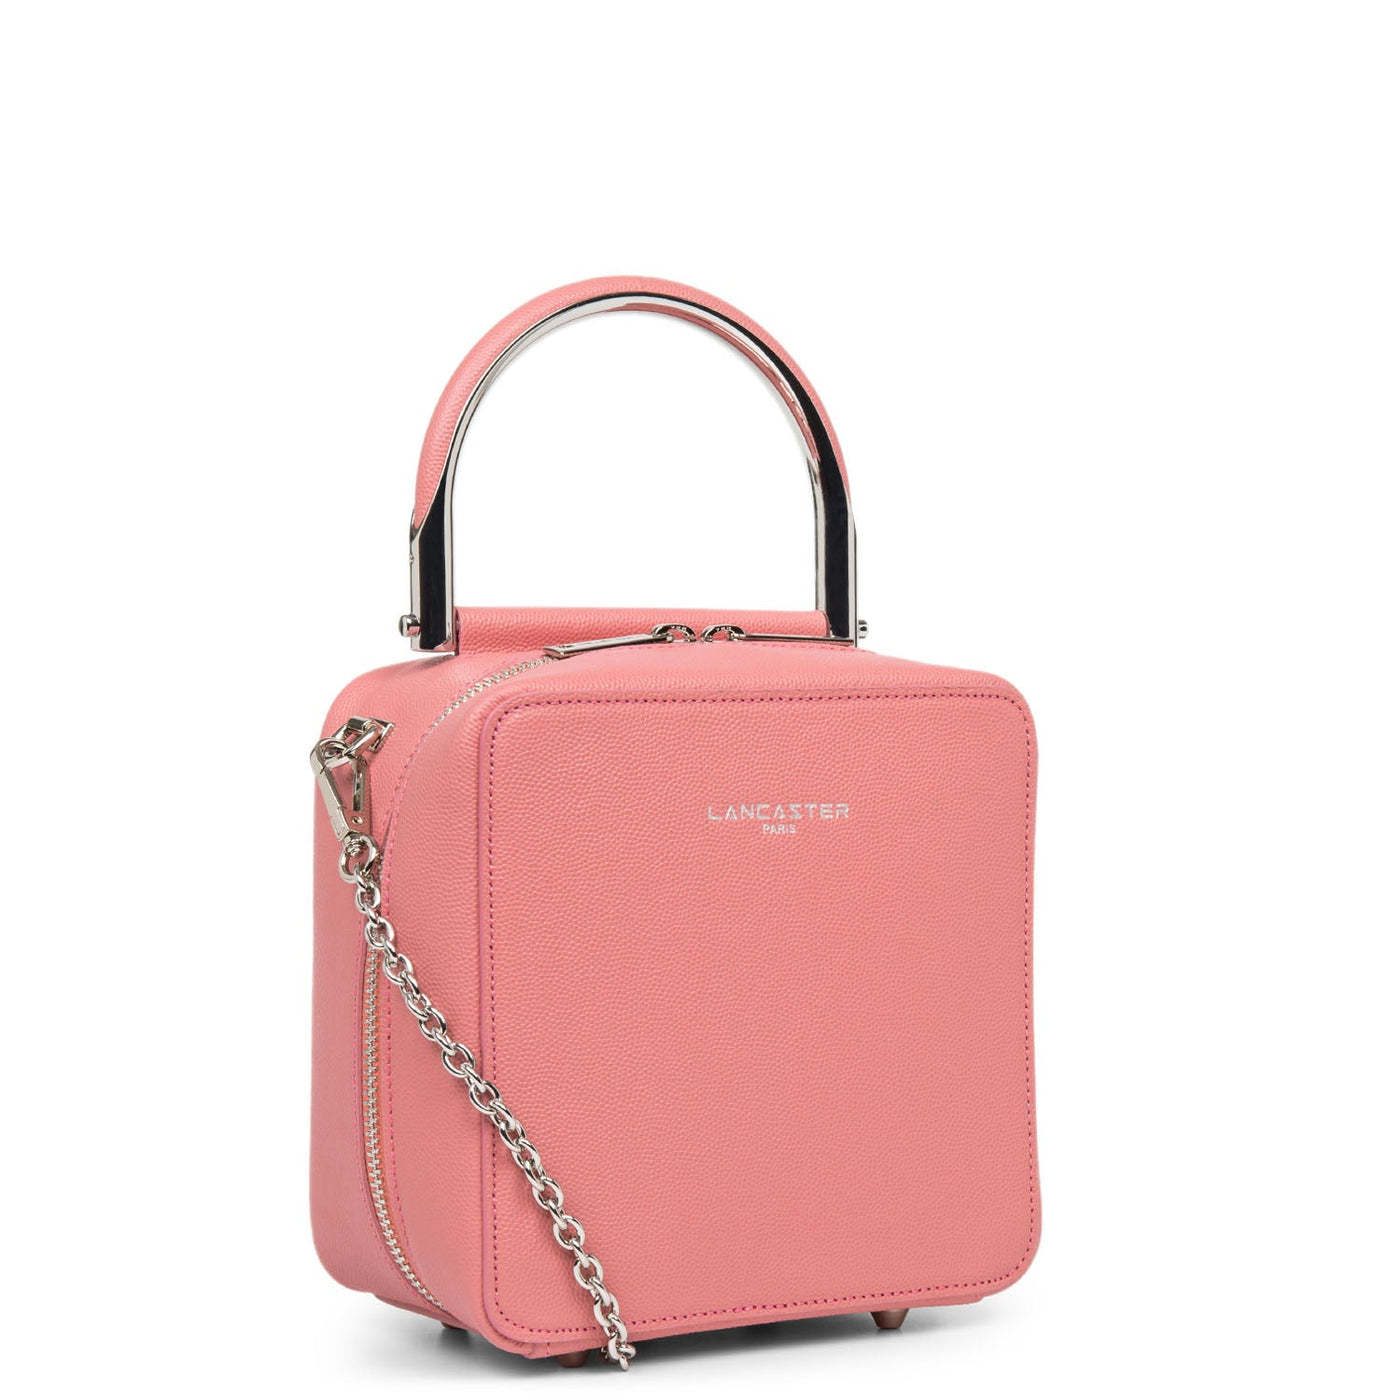 box bag - exotic bonnie #couleur_rose-blush